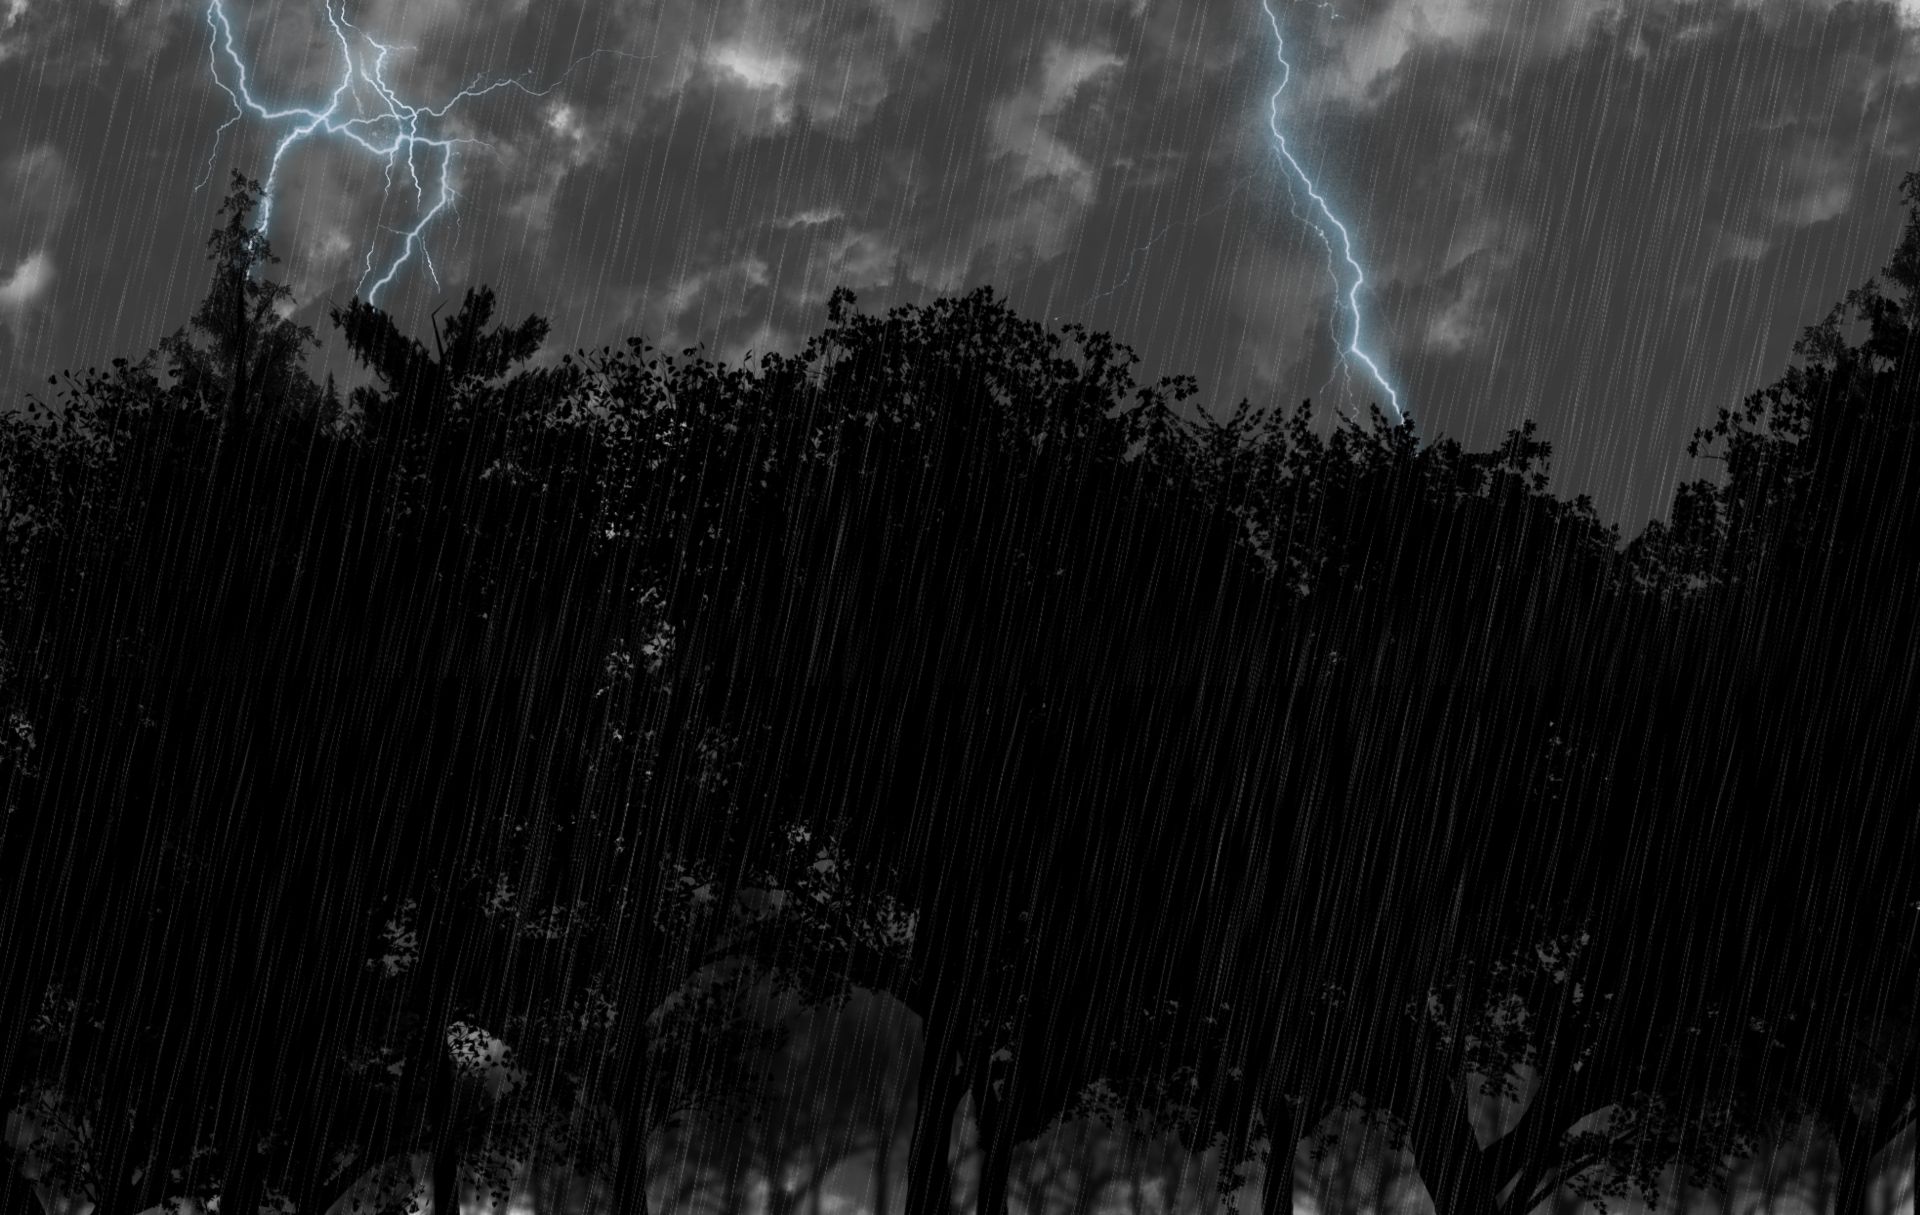 Rainstorm Wallpaper. Rainstorm Wallpaper, Swamp Rainstorm Wallpaper and Rainstorm Desktop Background